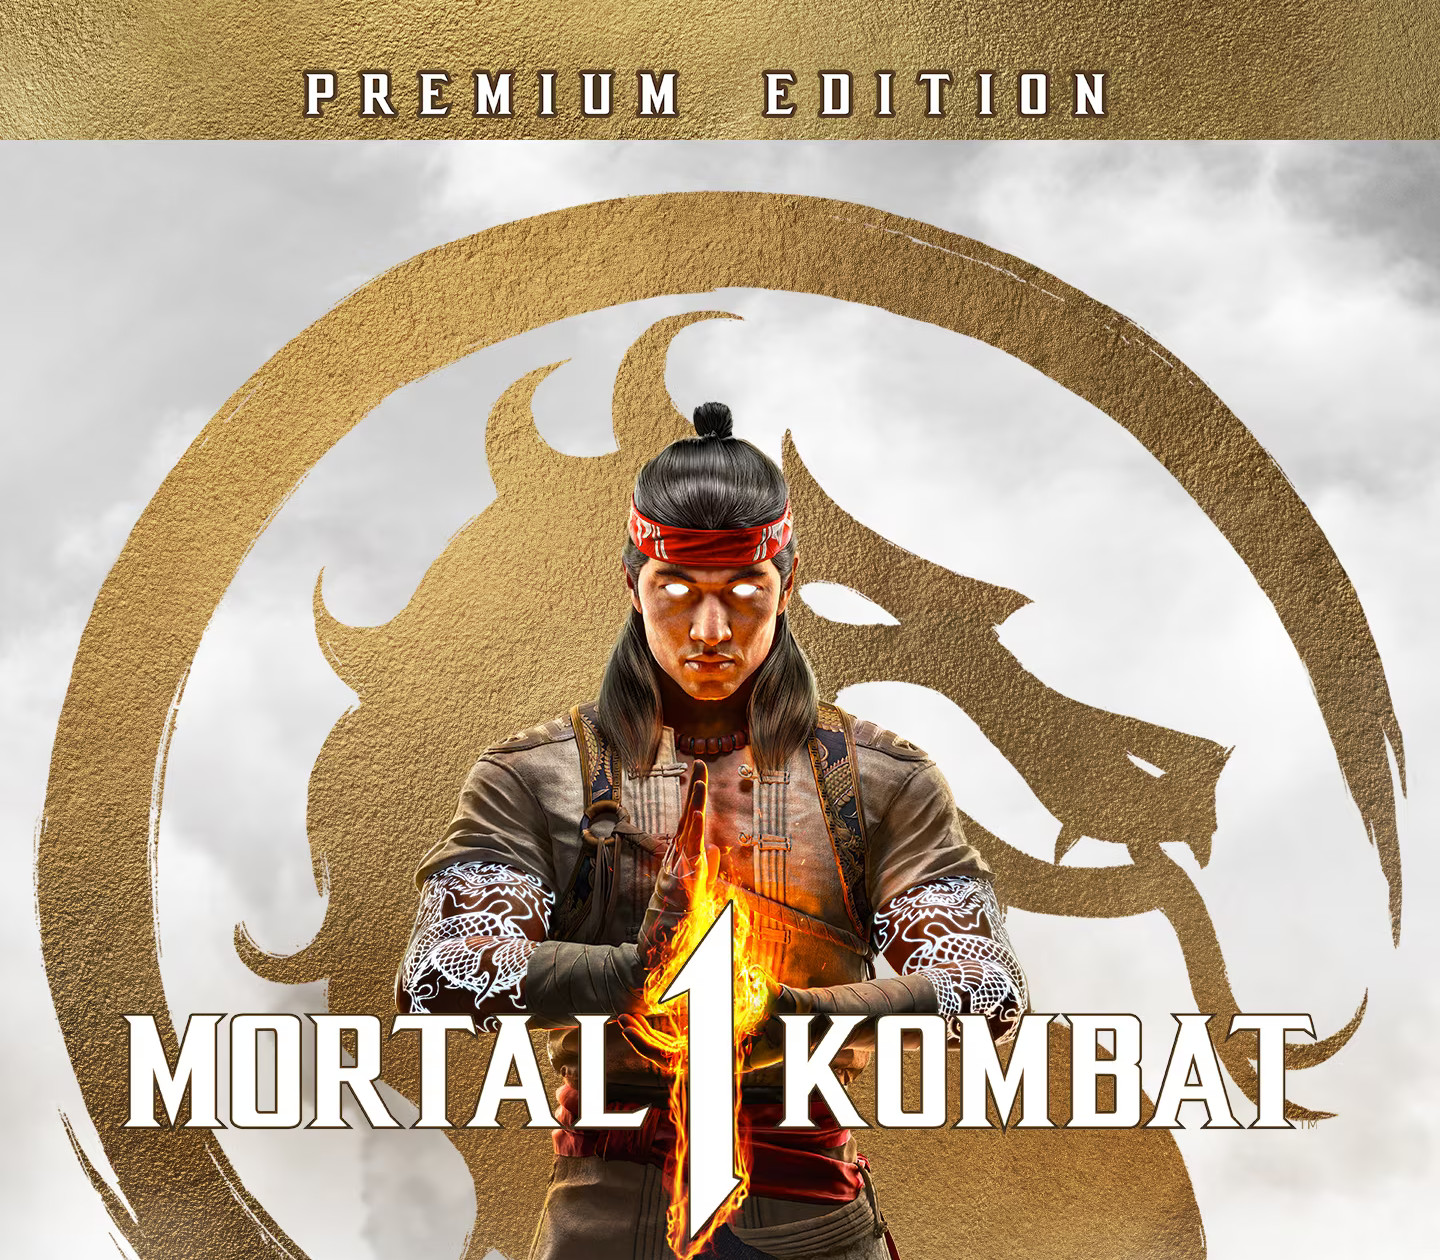 Mortal Kombat 11 Kombat Pack 2 (PC) Key cheap - Price of $2.80 for Steam